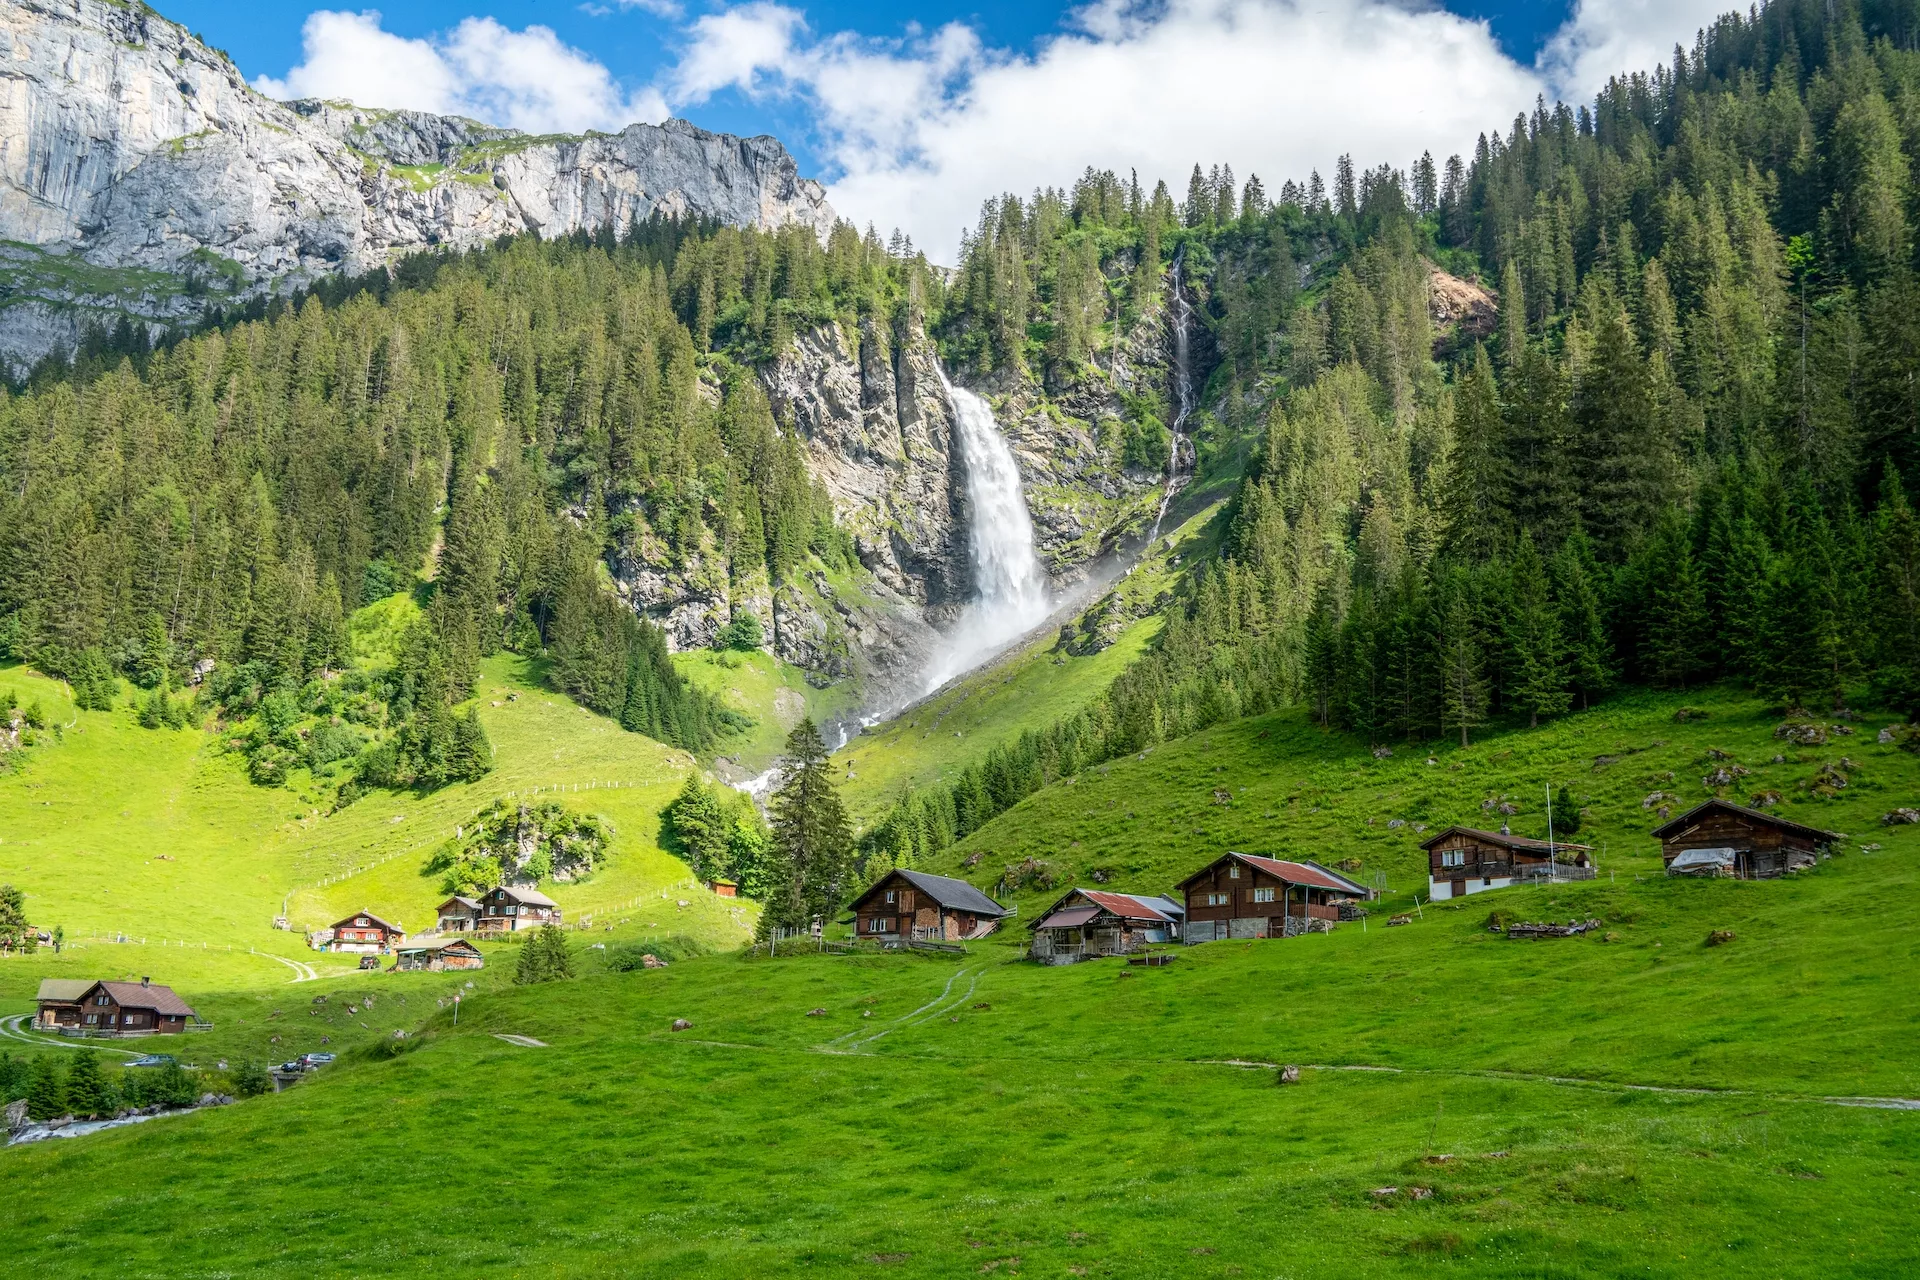 Maravillosa cascada Stauber en el valle de Schachen